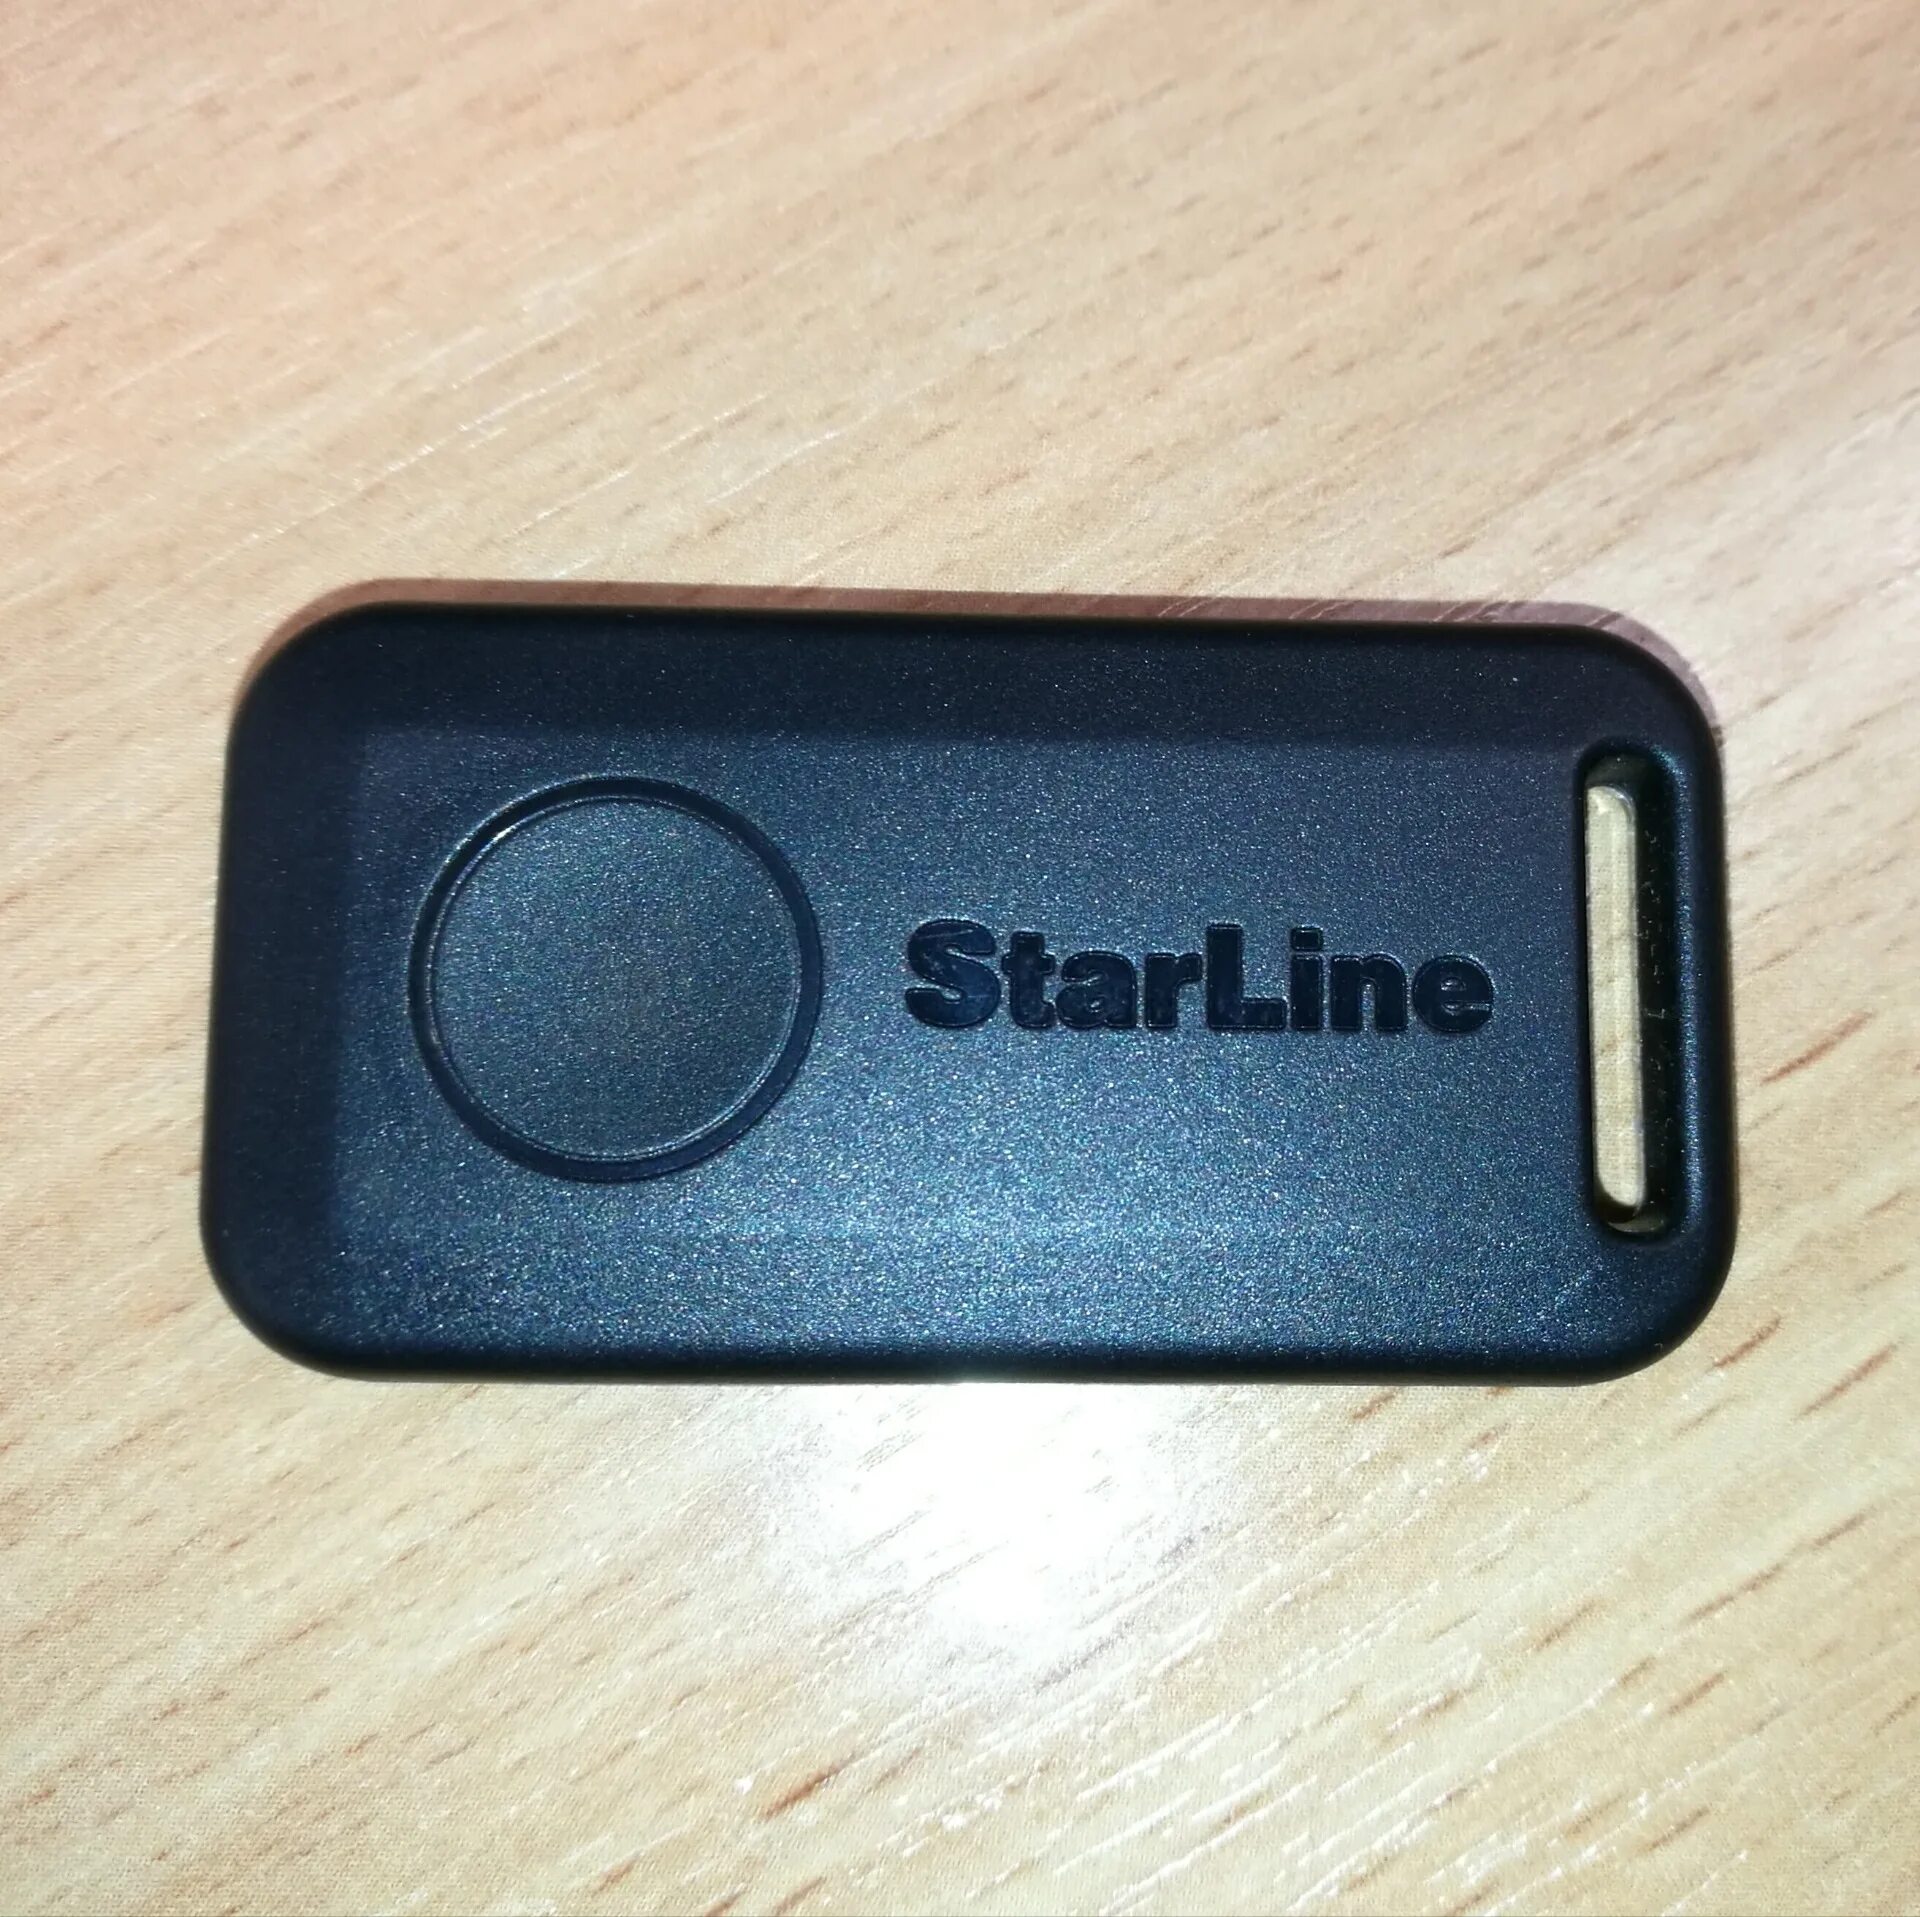 Метка STARLINE s96. Старлайн s96. Сигнализация STARLINE s96 v2. STARLINE a96 v2 брелок. Метки старлайн е96